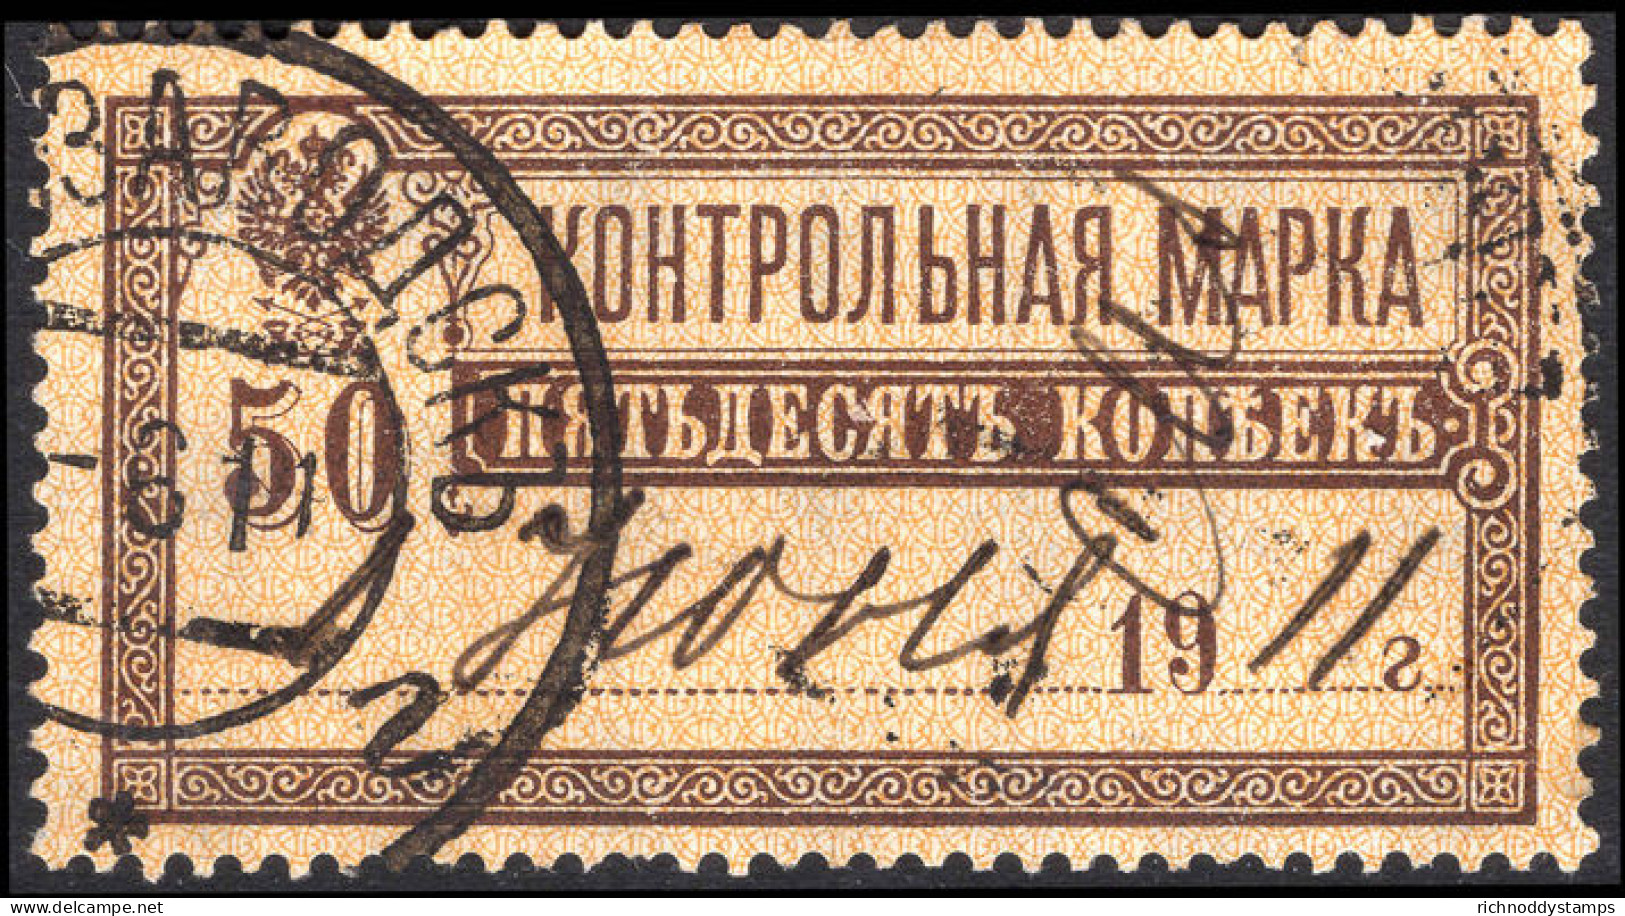 Russia 1921 50k Control Stamp Fine Used. - Oblitérés